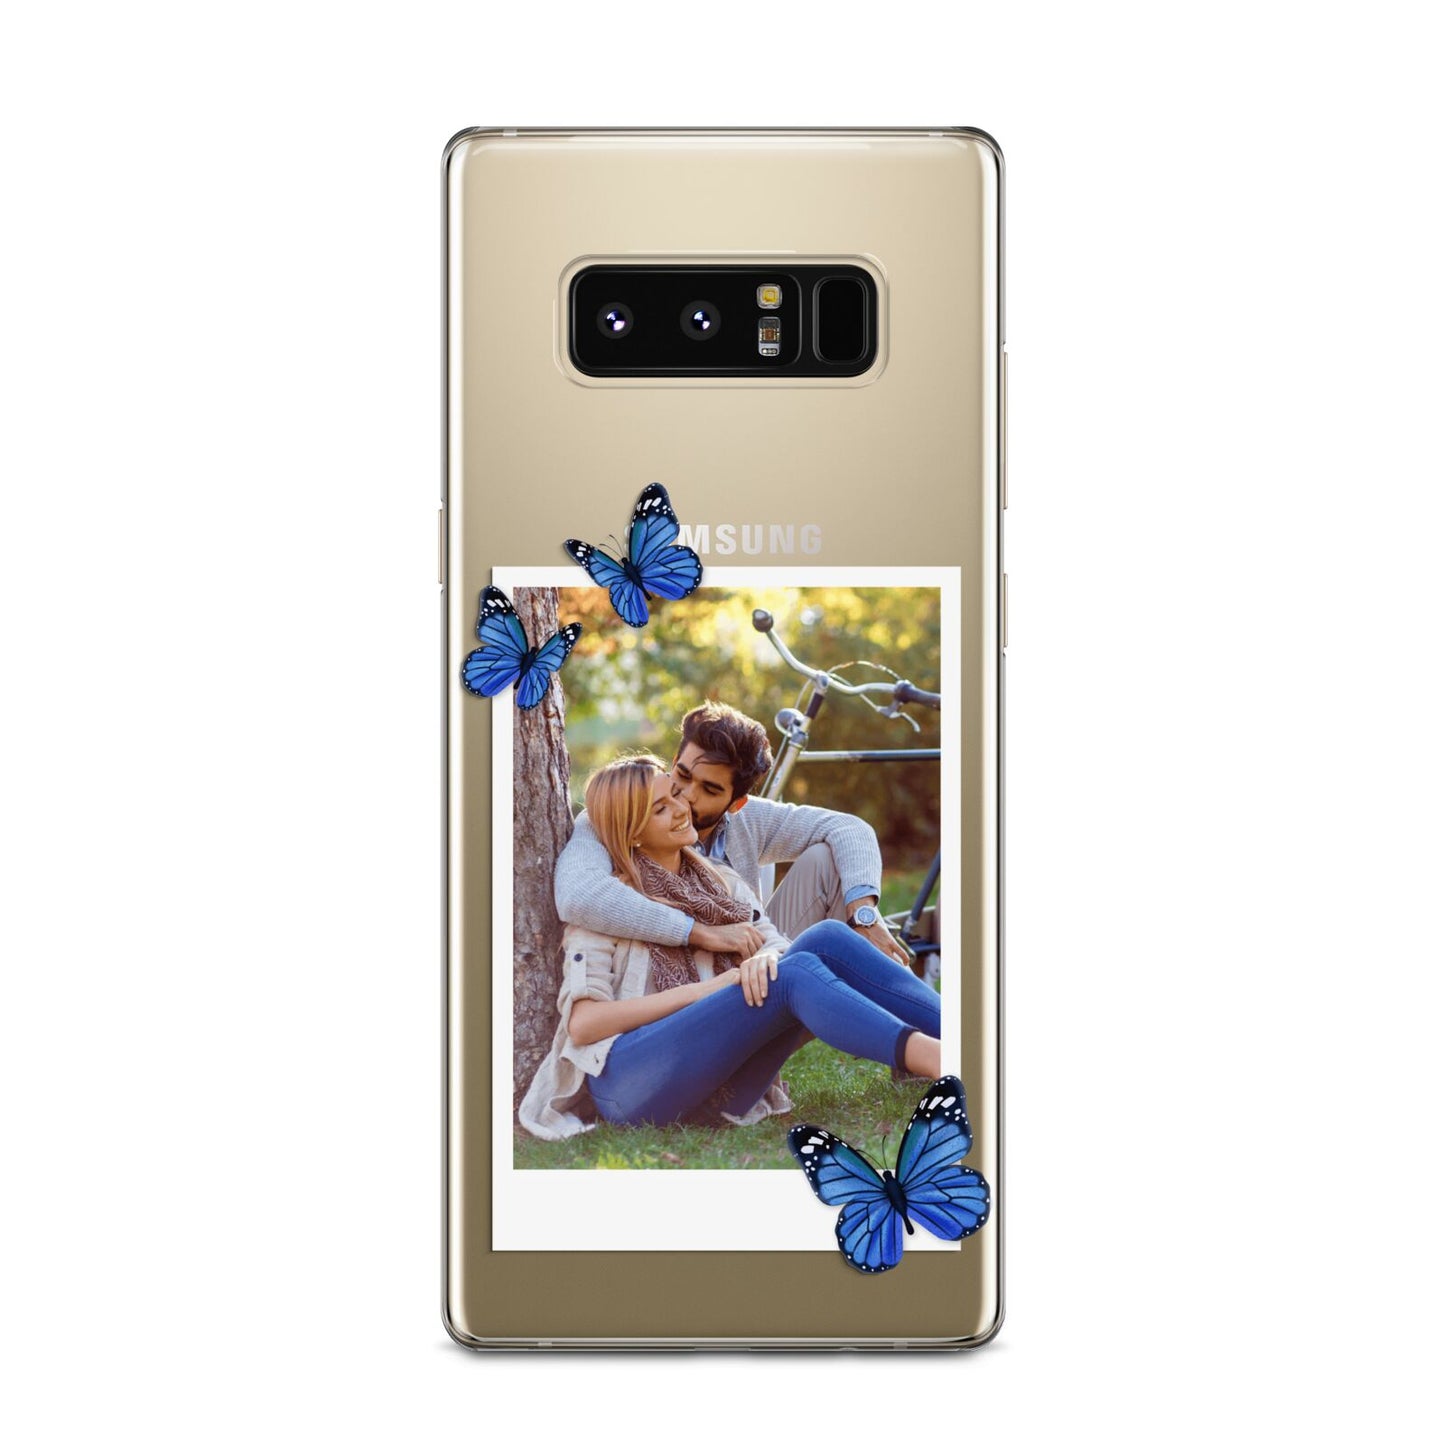 Polaroid Photo Samsung Galaxy Note 8 Case